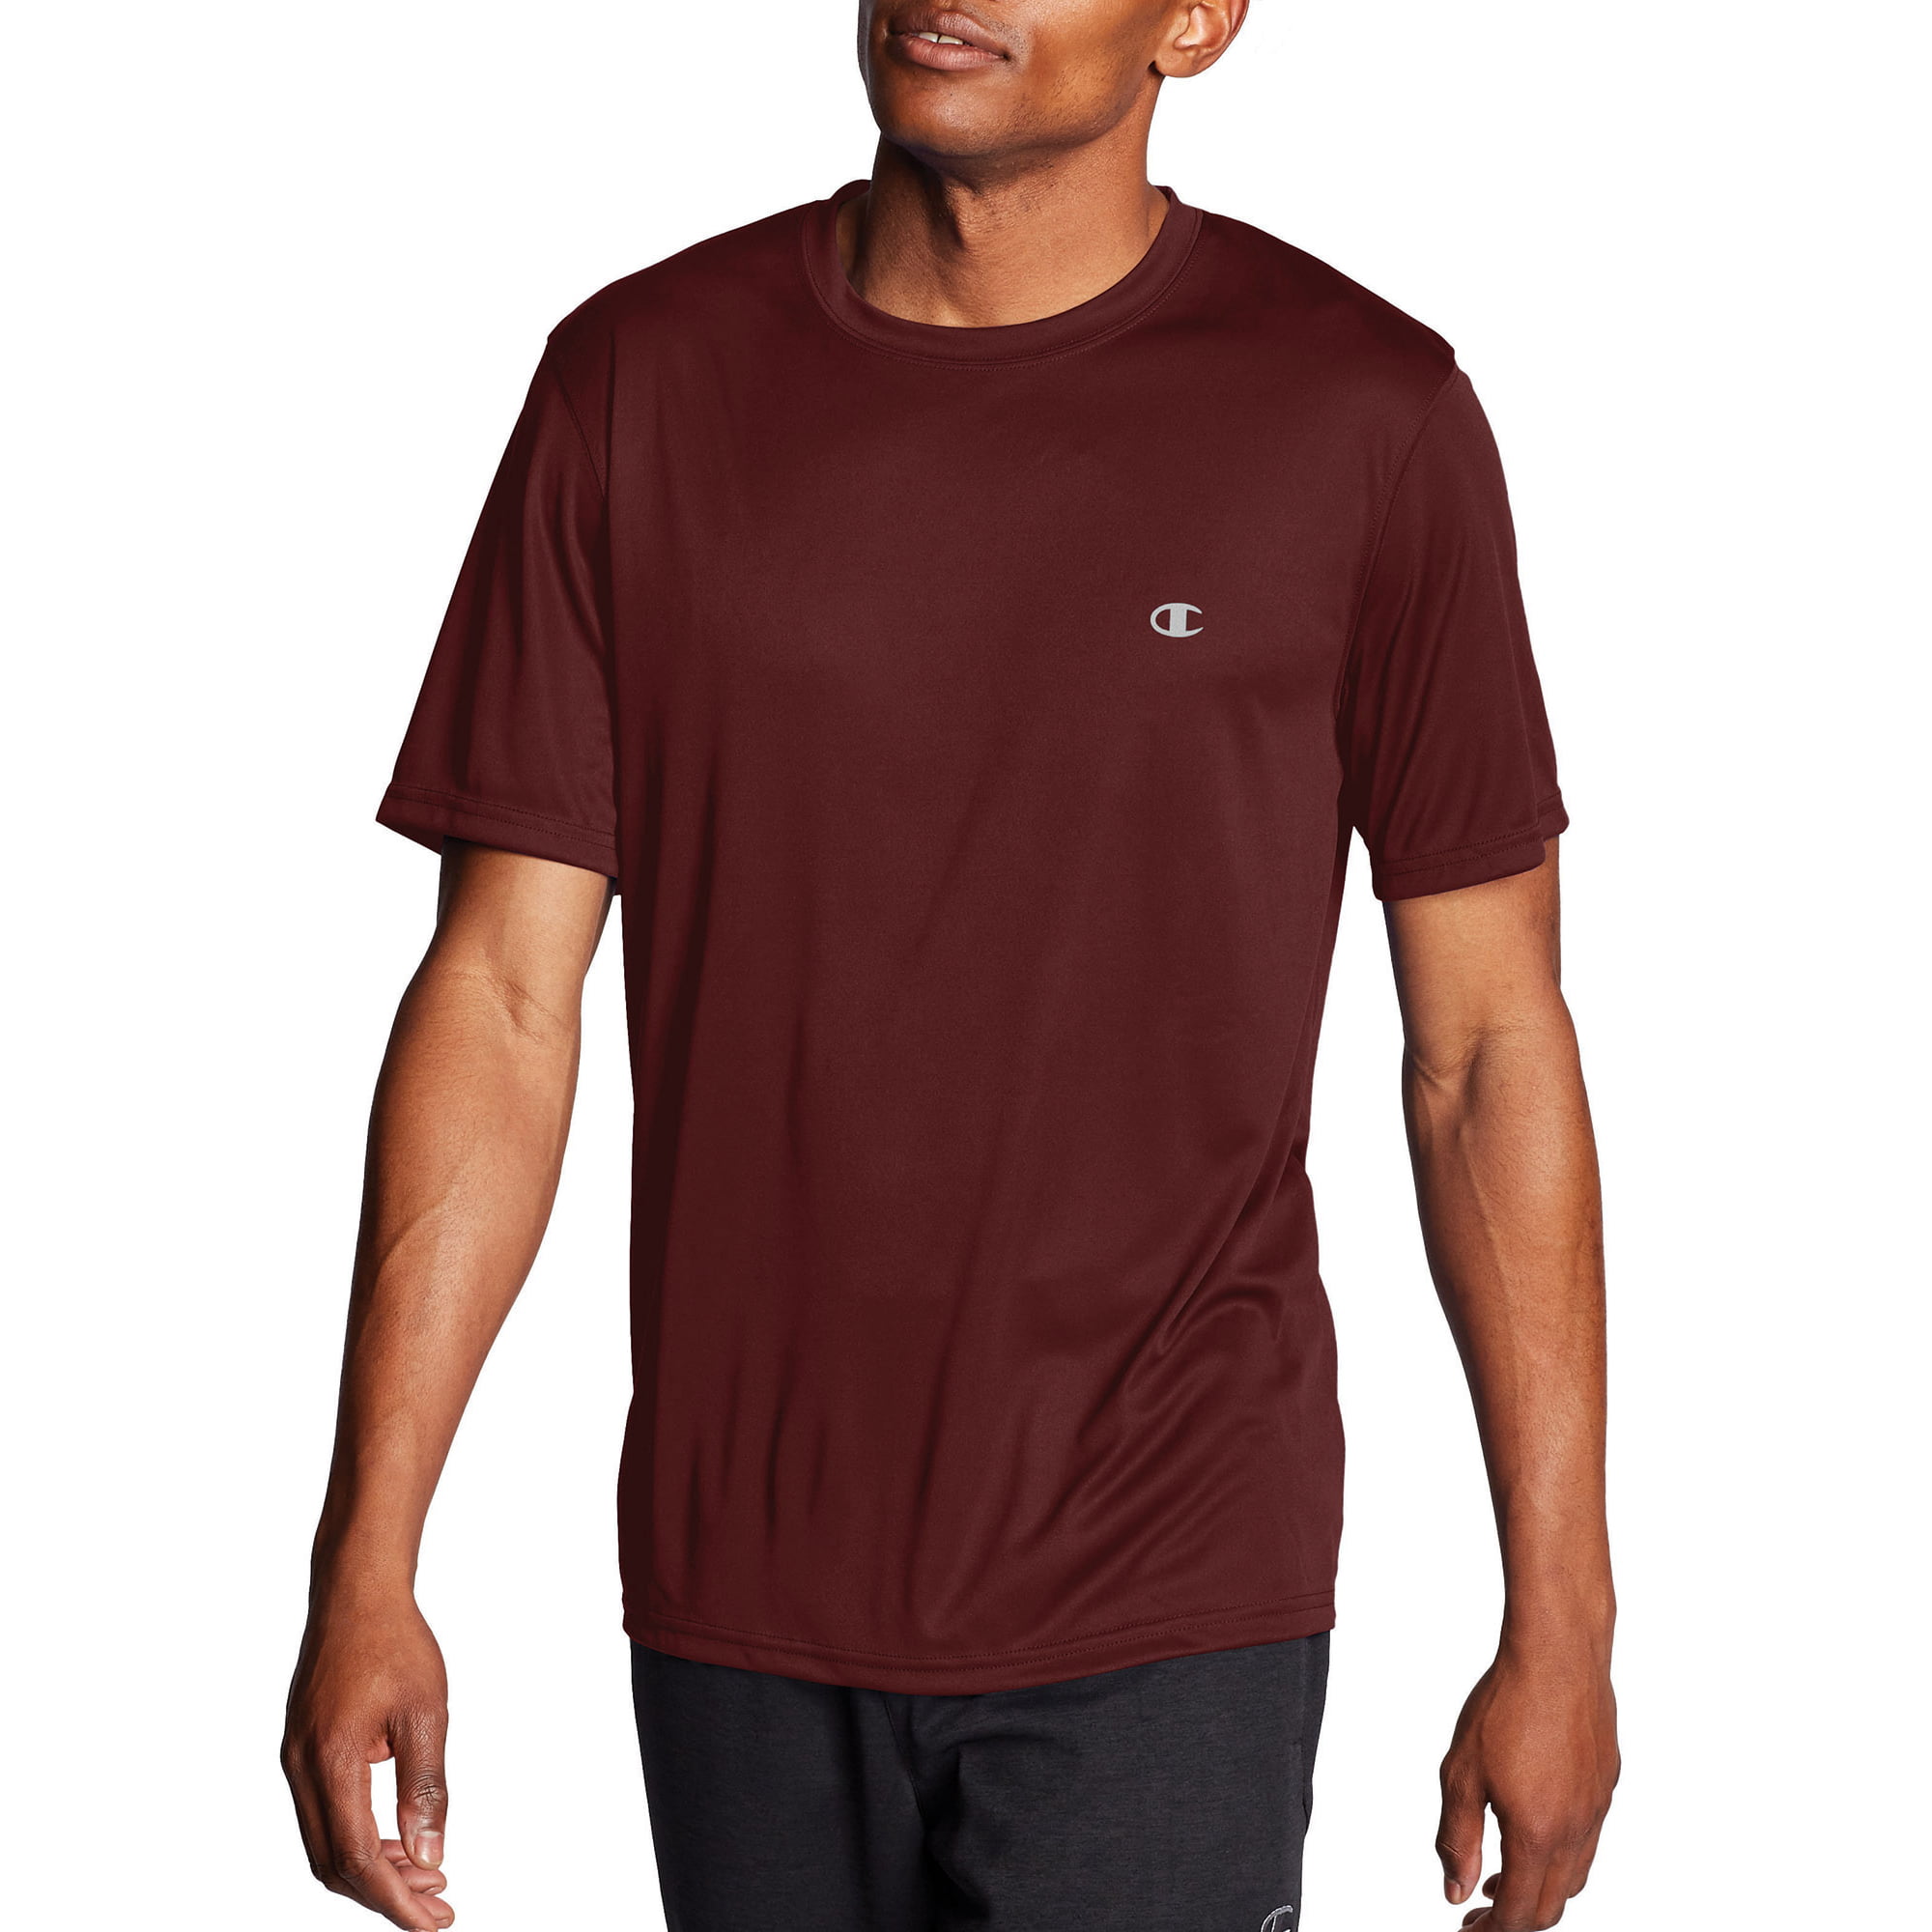 Misforståelse Diverse Omhyggelig læsning Champion Men's Double Dry Performance T-Shirt, up to Size 2XL - Walmart.com